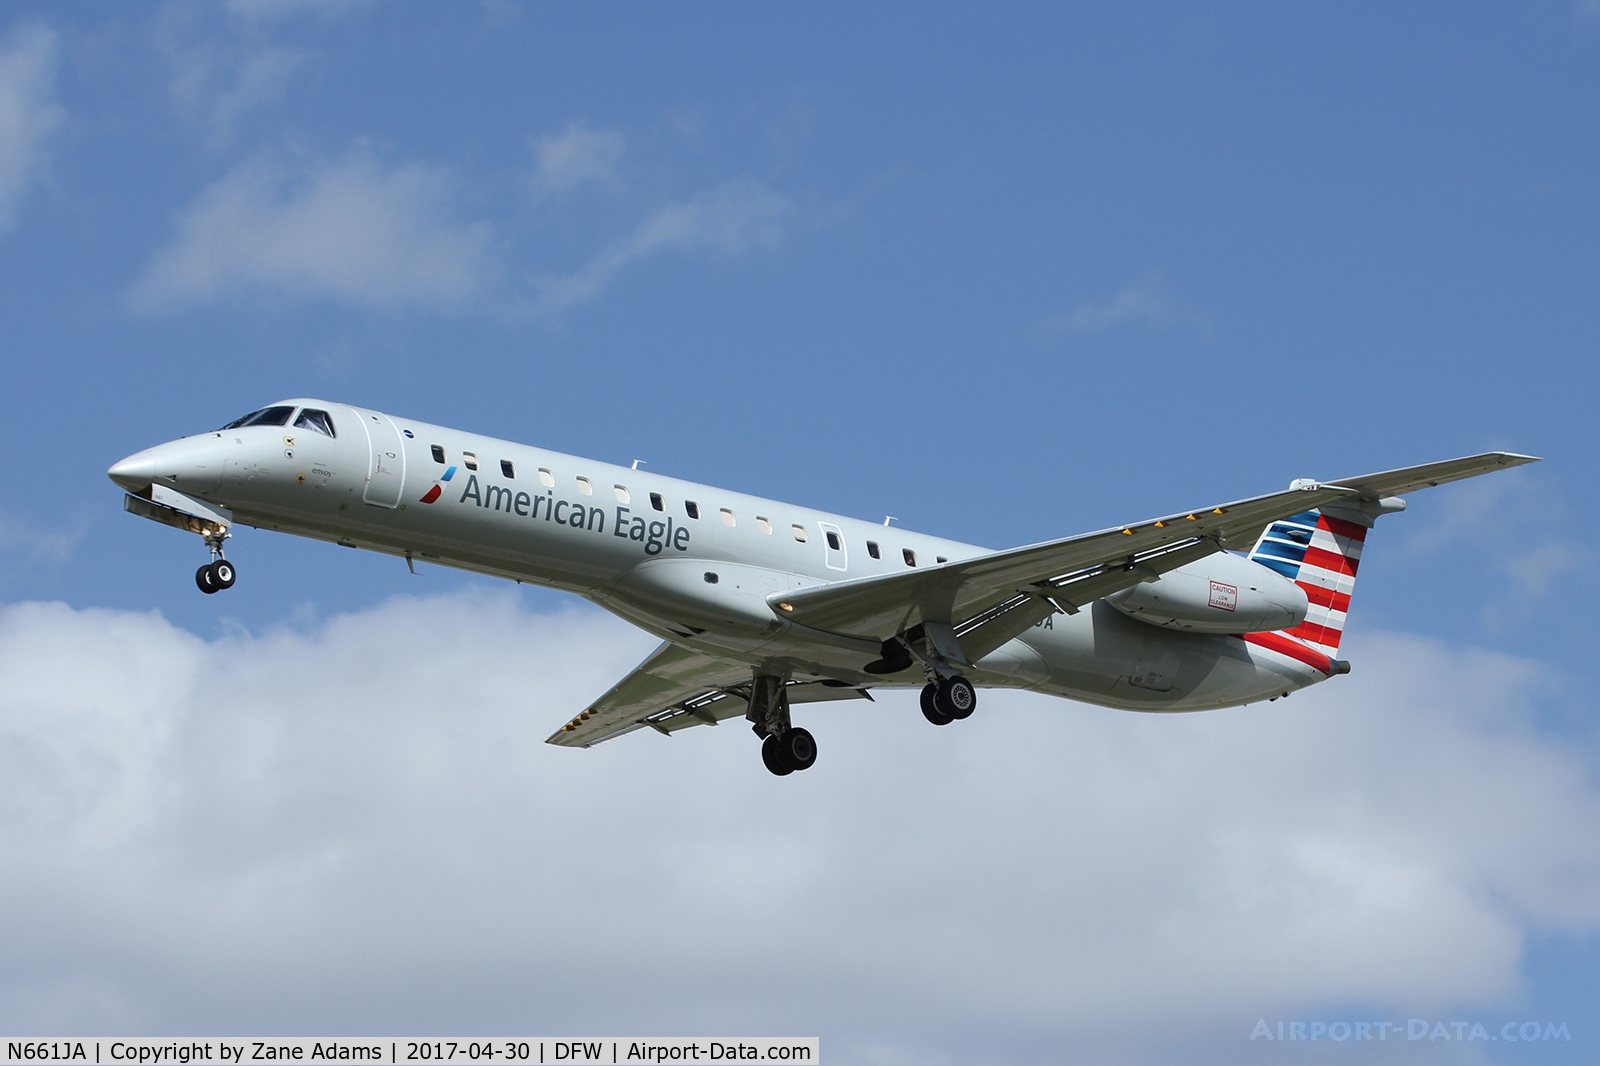 N661JA, 2003 Embraer ERJ-145LR (EMB-145LR) C/N 145766, Arriving at DFW Airport